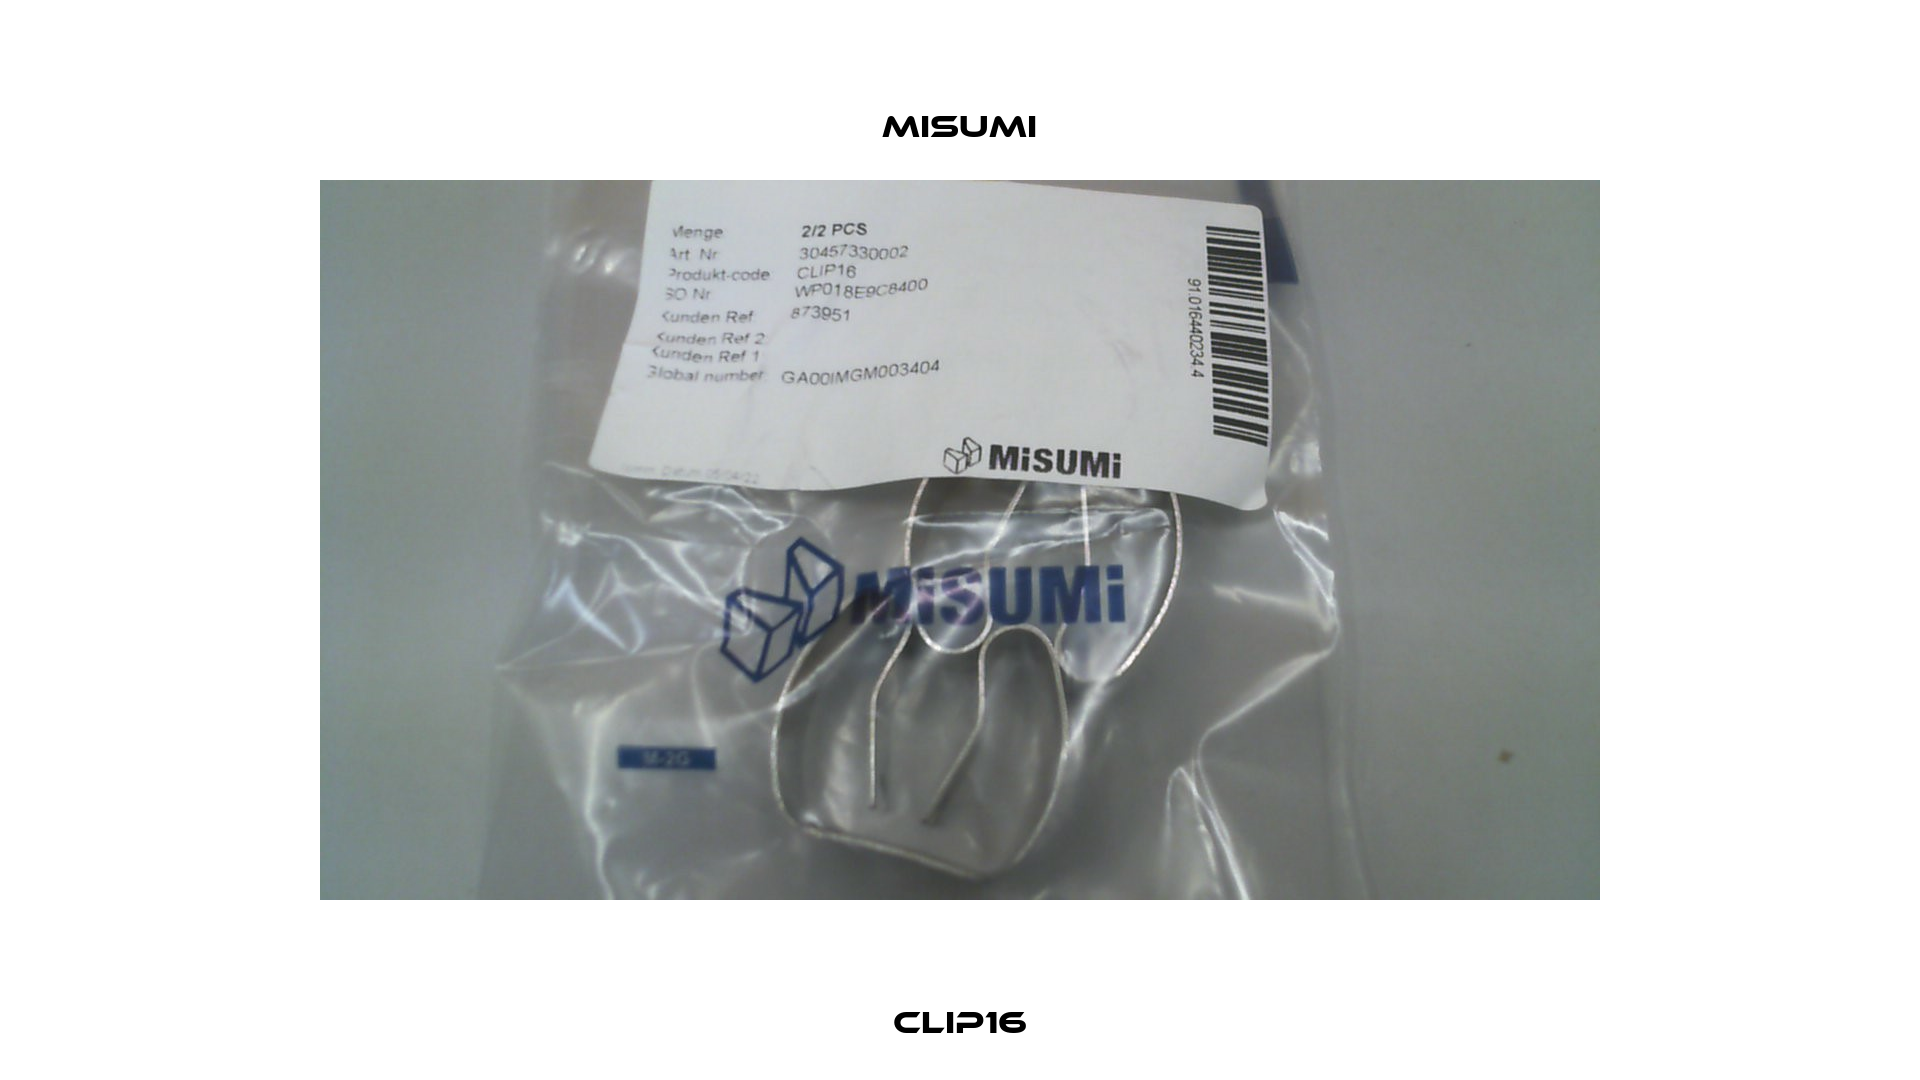 CLIP16 Misumi